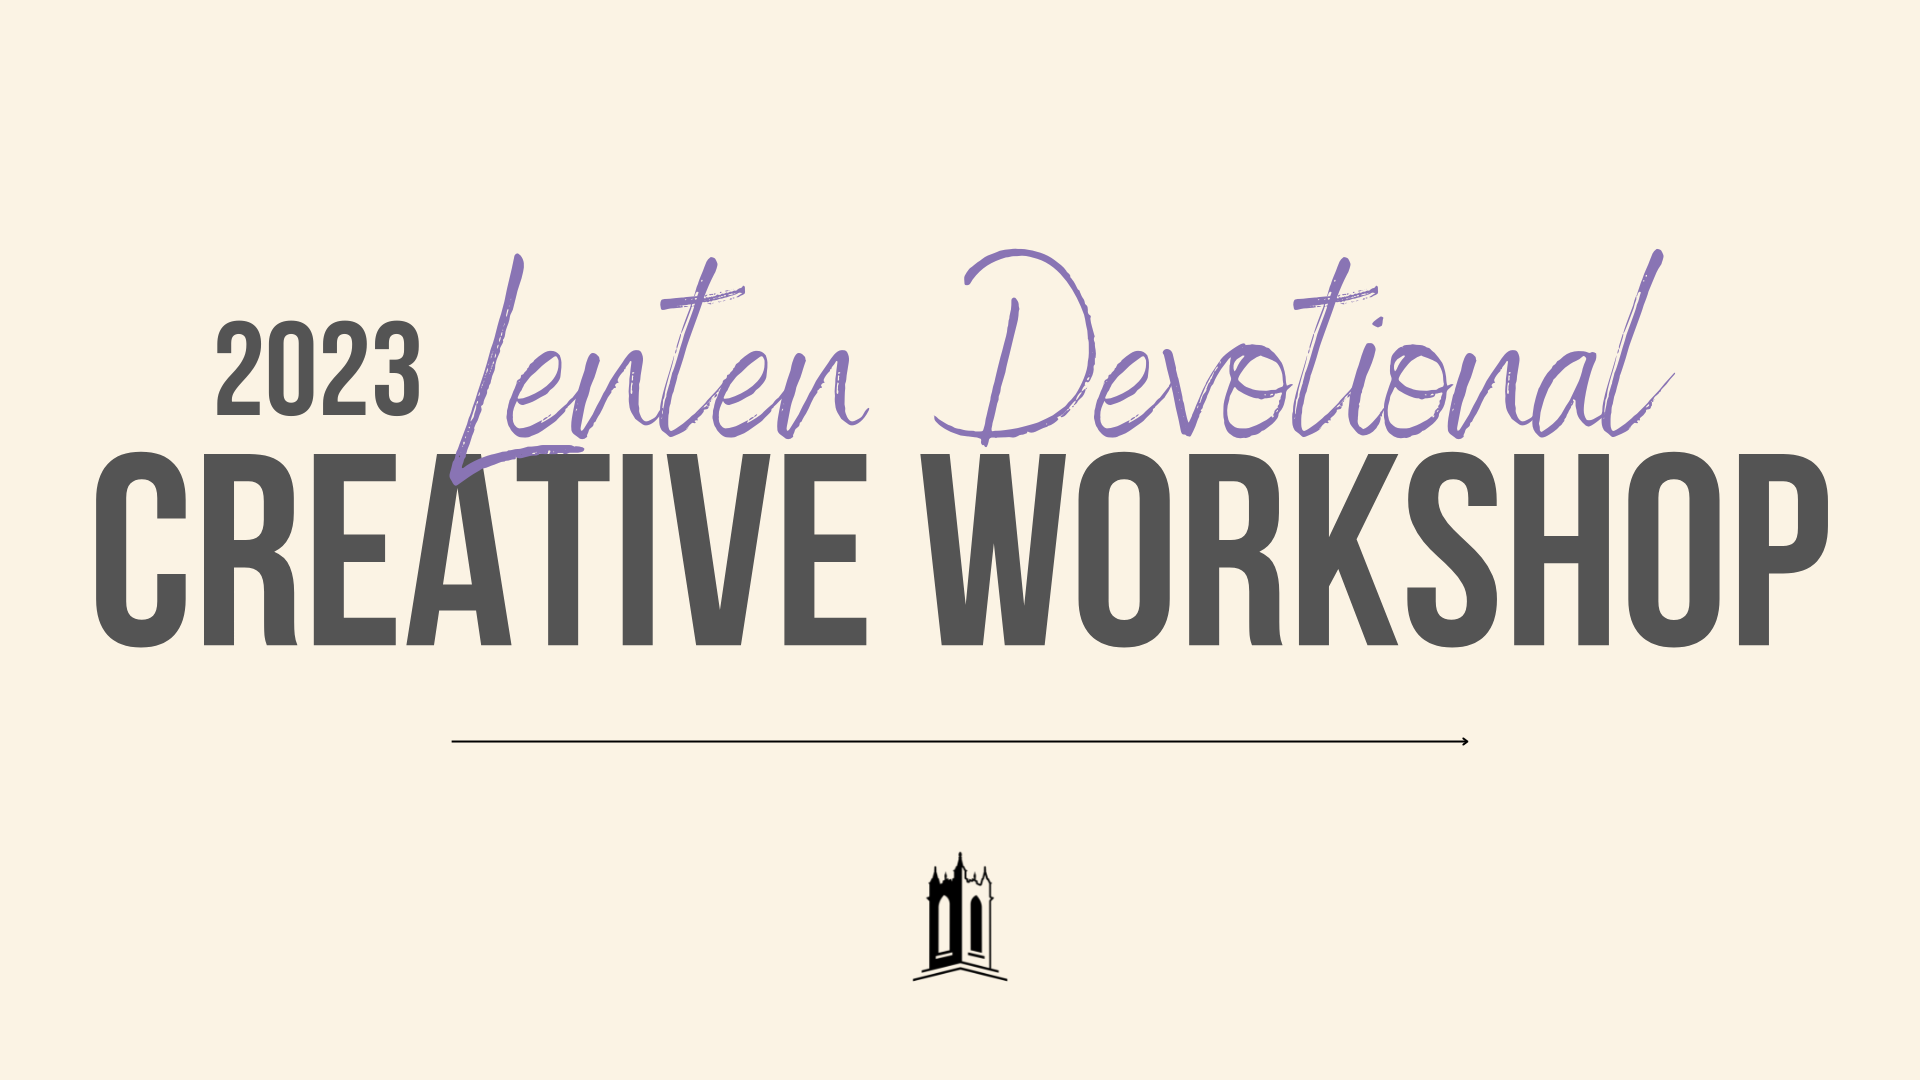 Creative Workshop for the 2023 Lenten Devotional